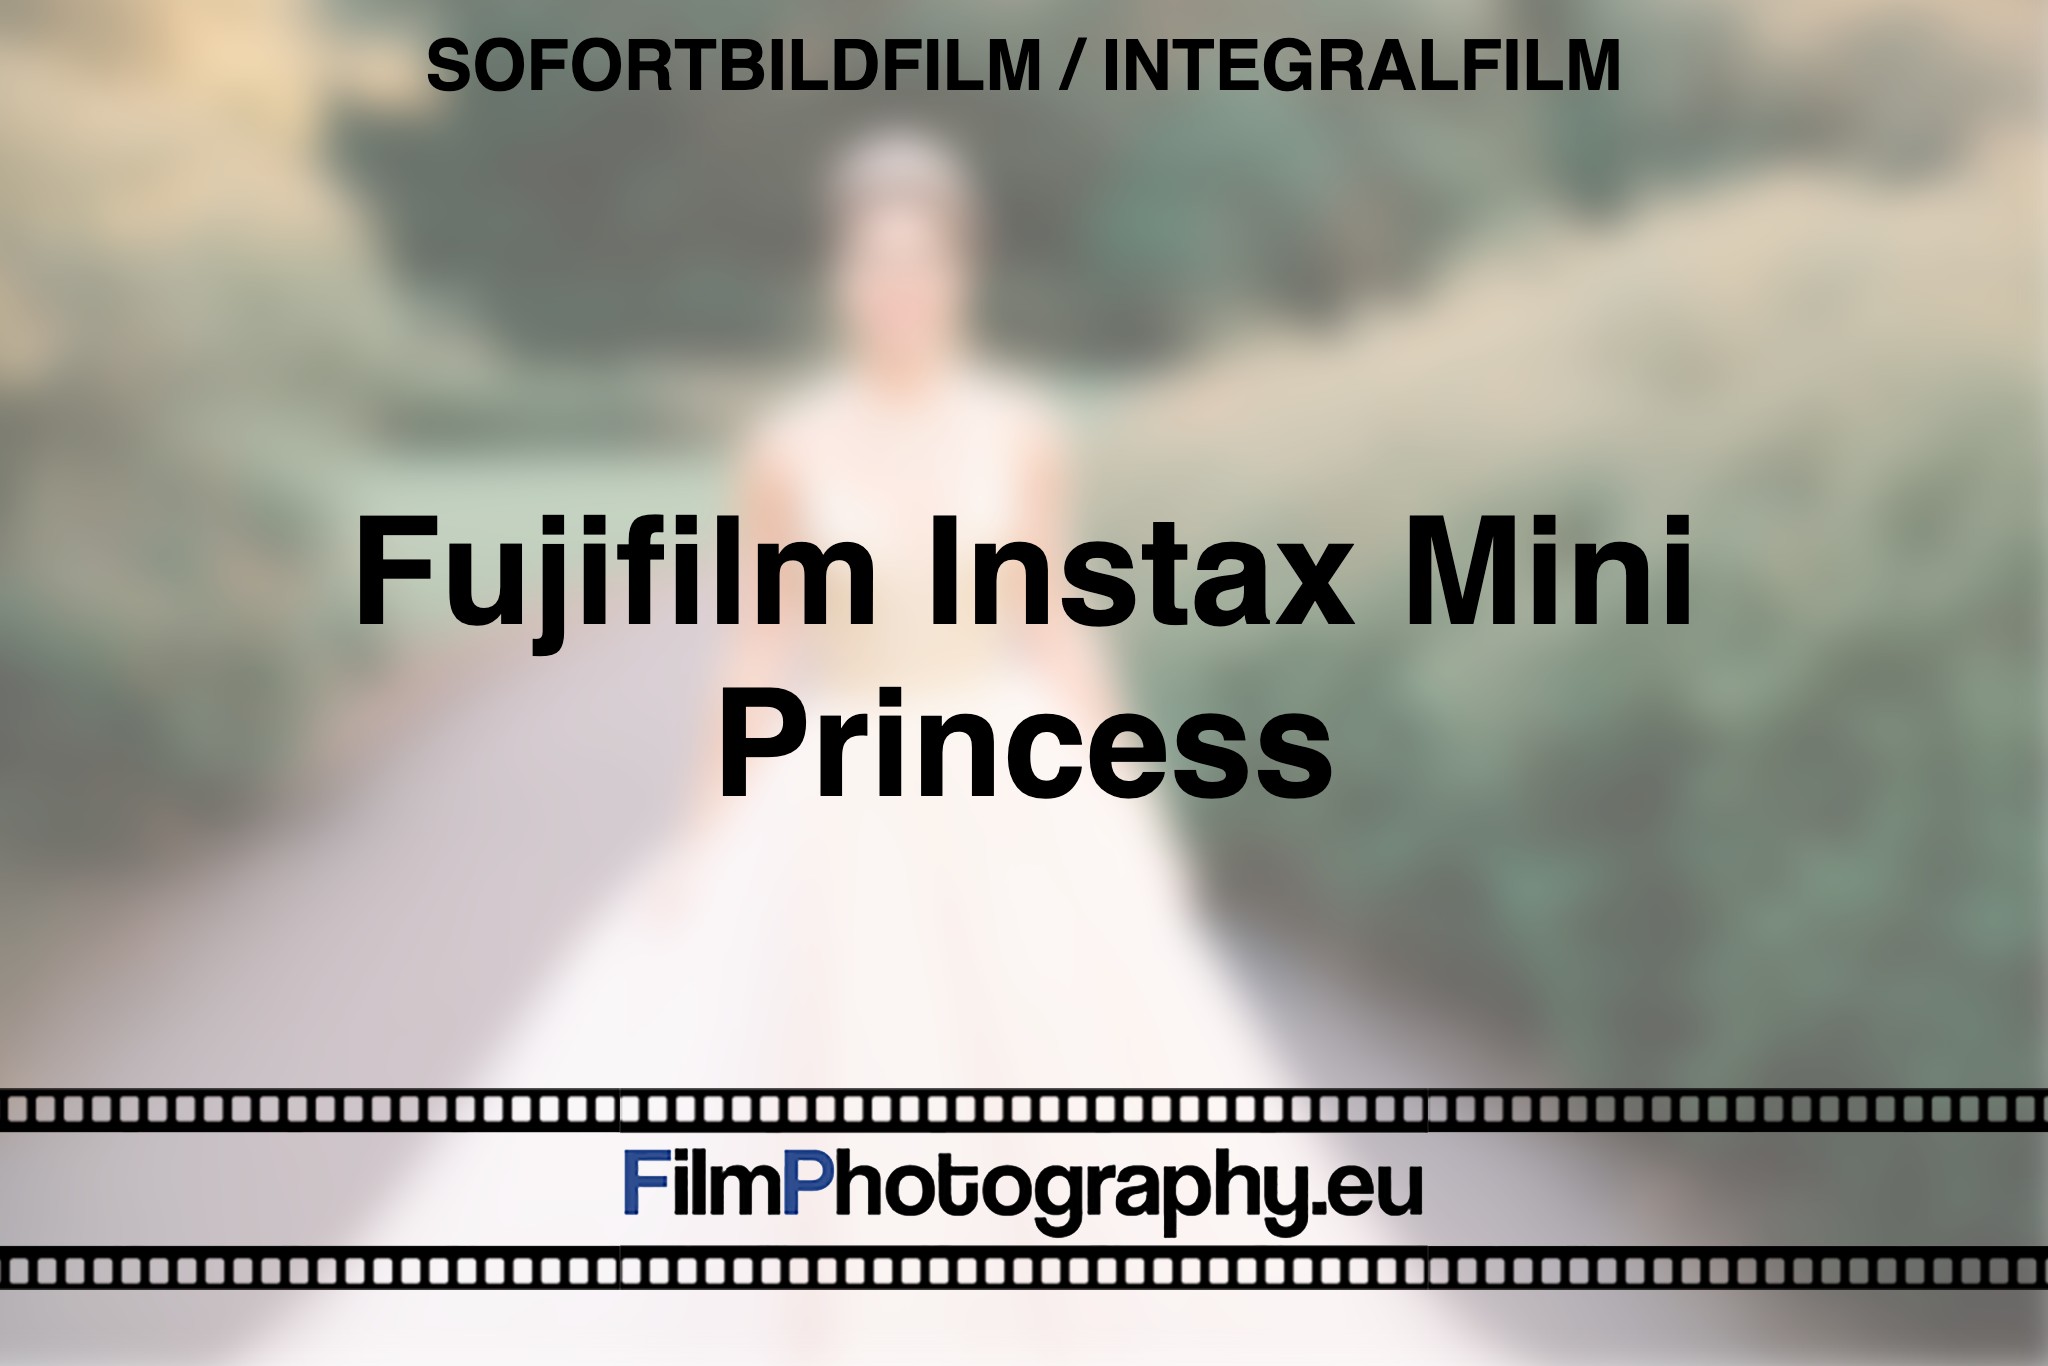 fujifilm-instax-mini-princess-sofortbildfilm-integralfilm-fp-bnv